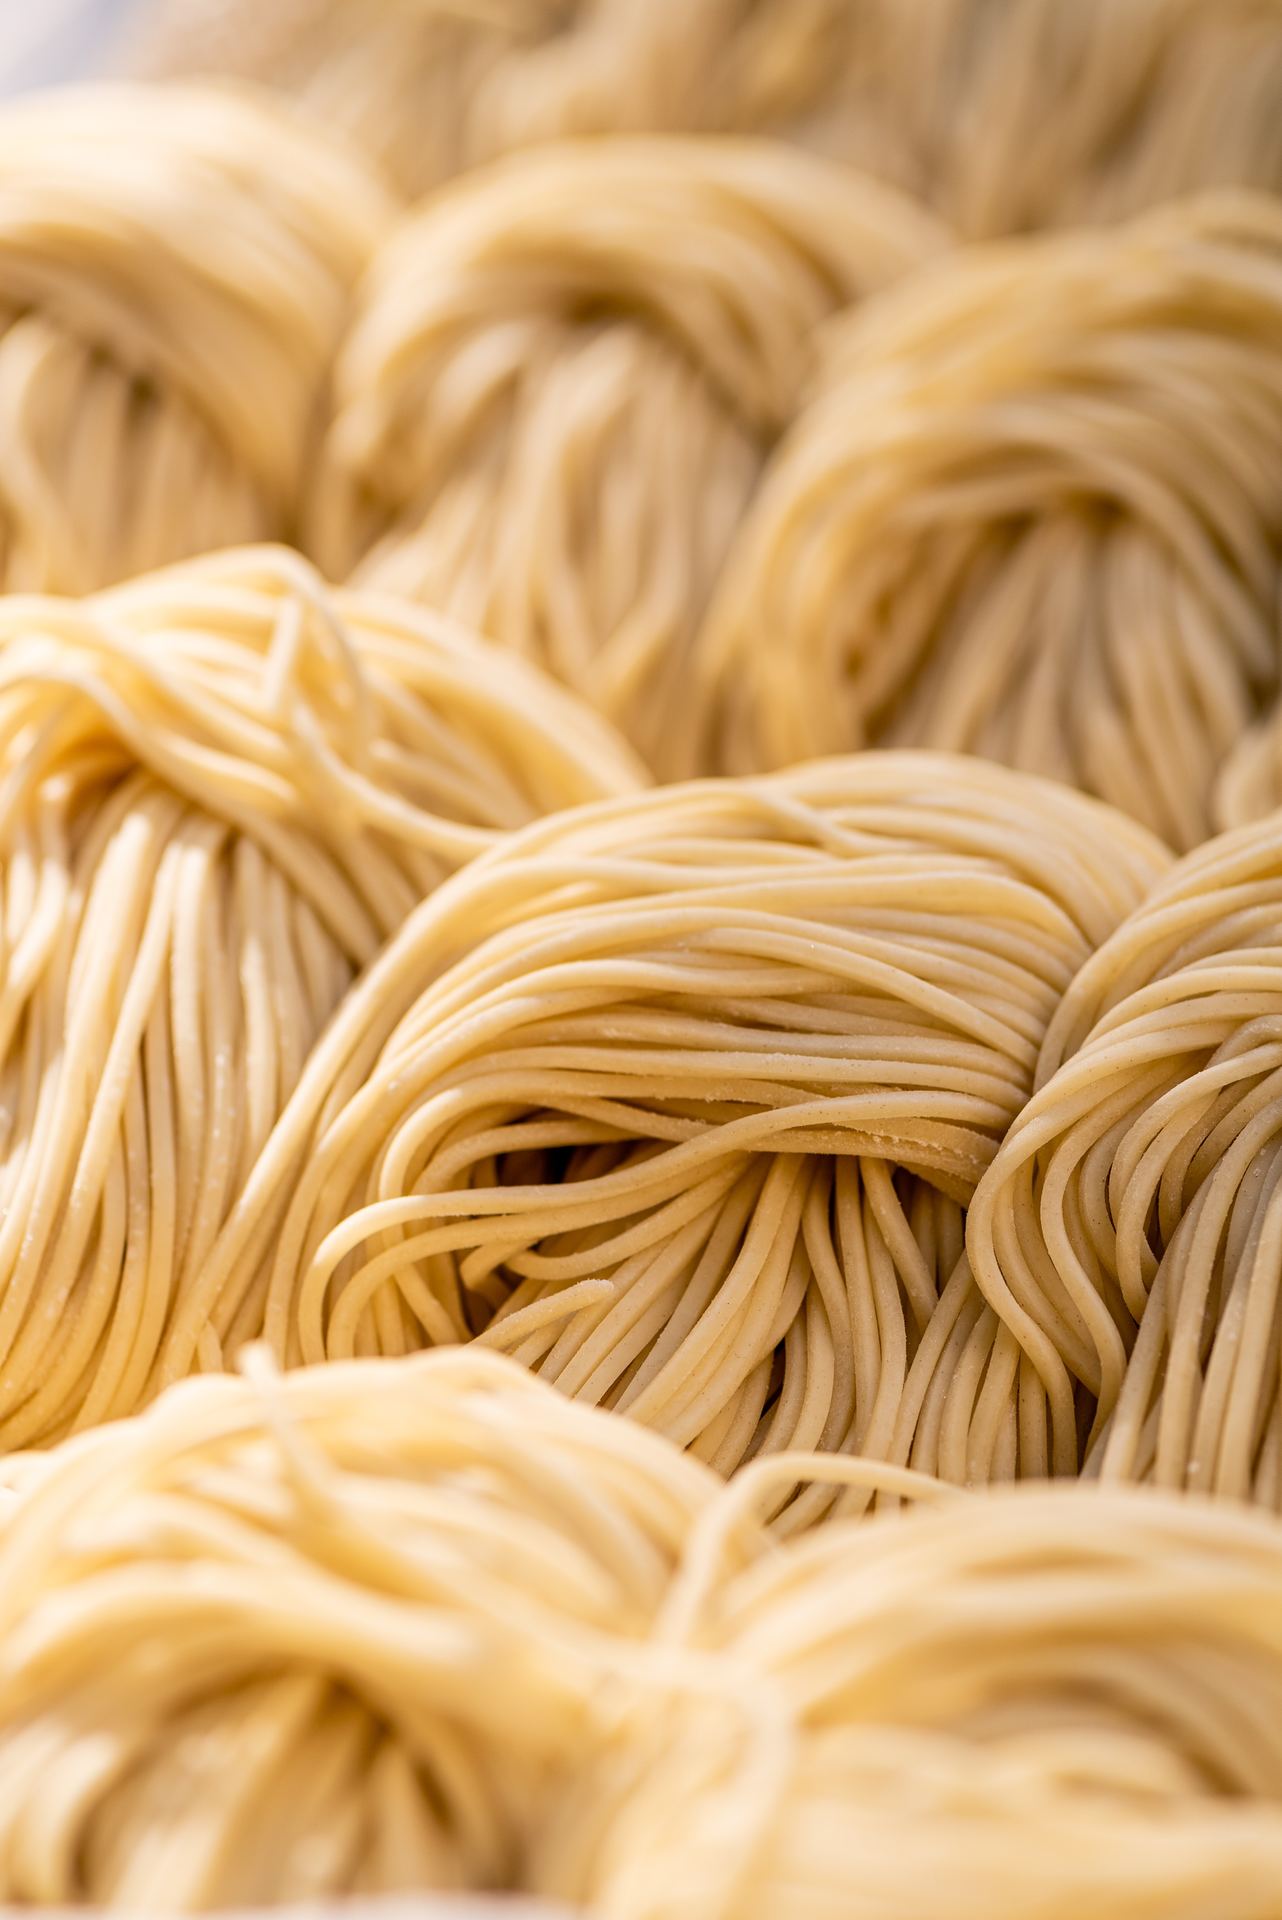 Dried Noodles